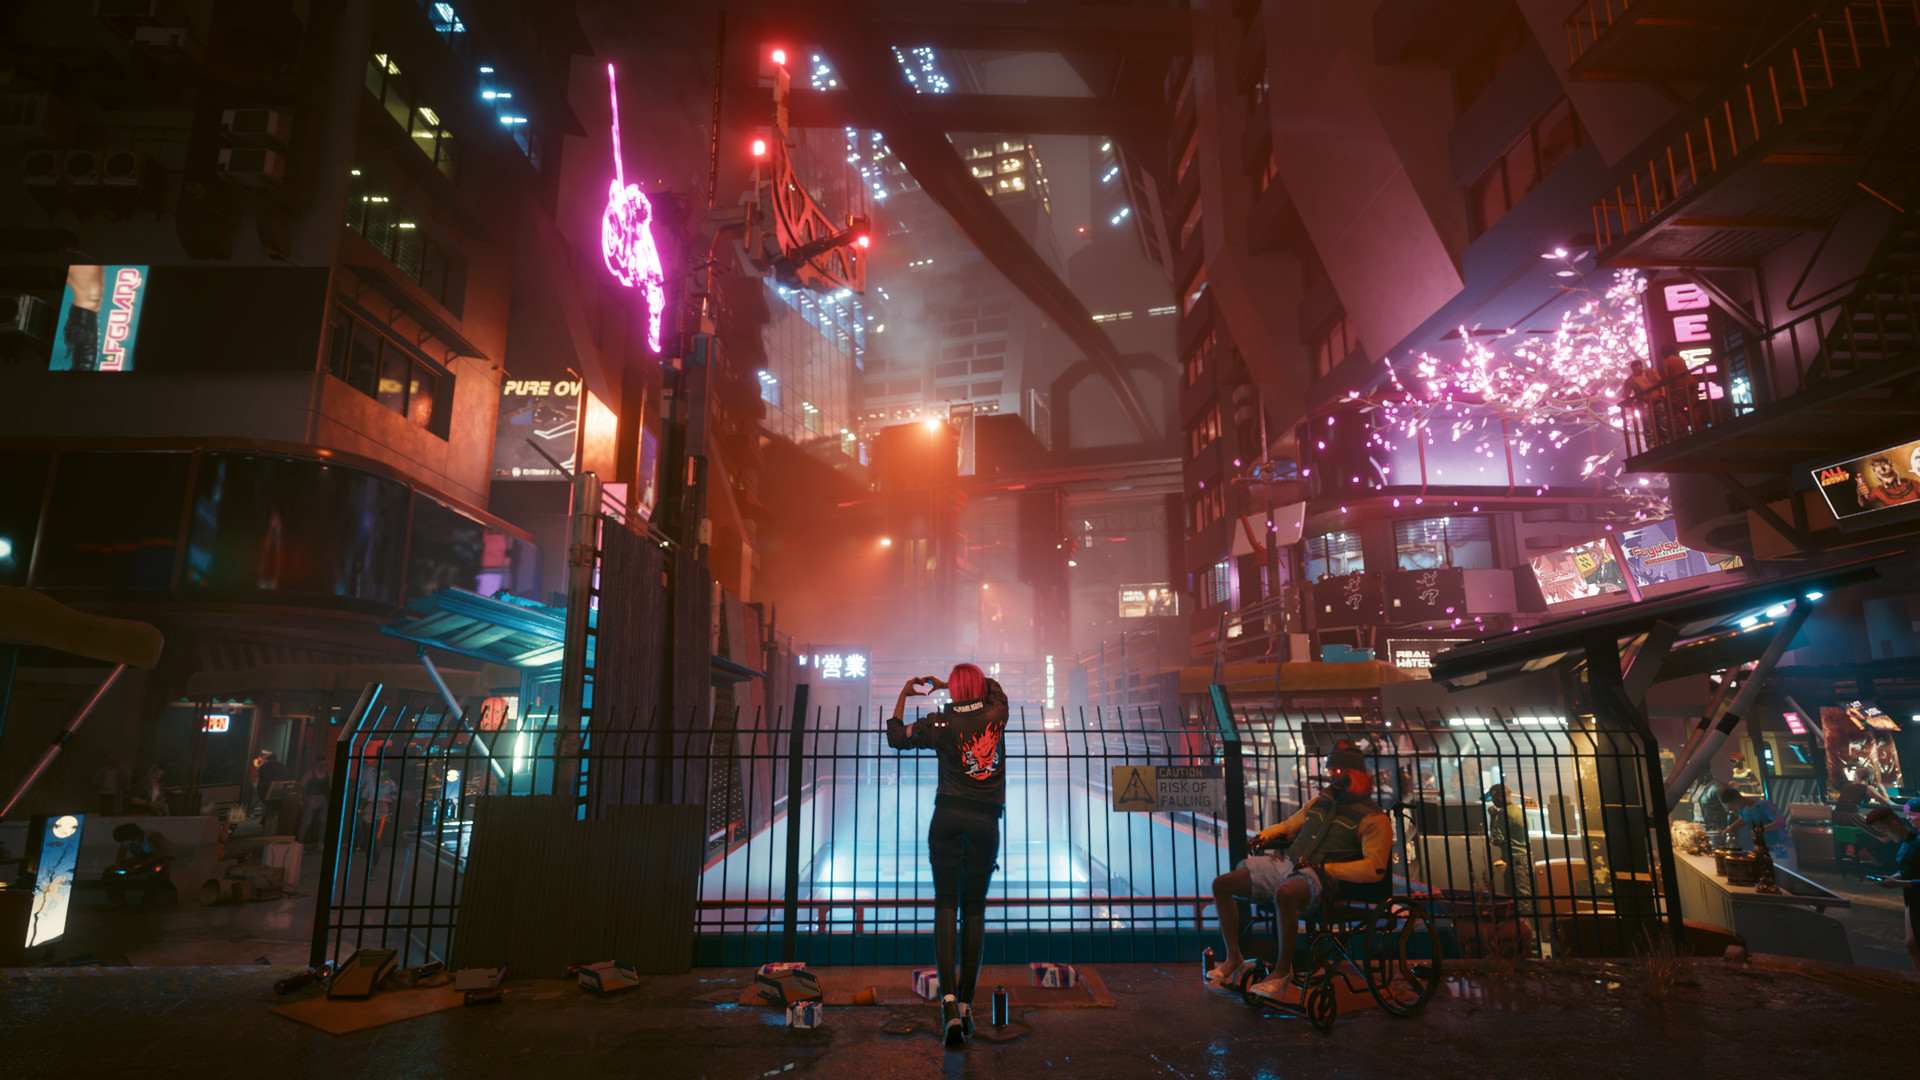 HD wallpaper: Cyberpunk 2077, 4K, city, night, neon, futuristic